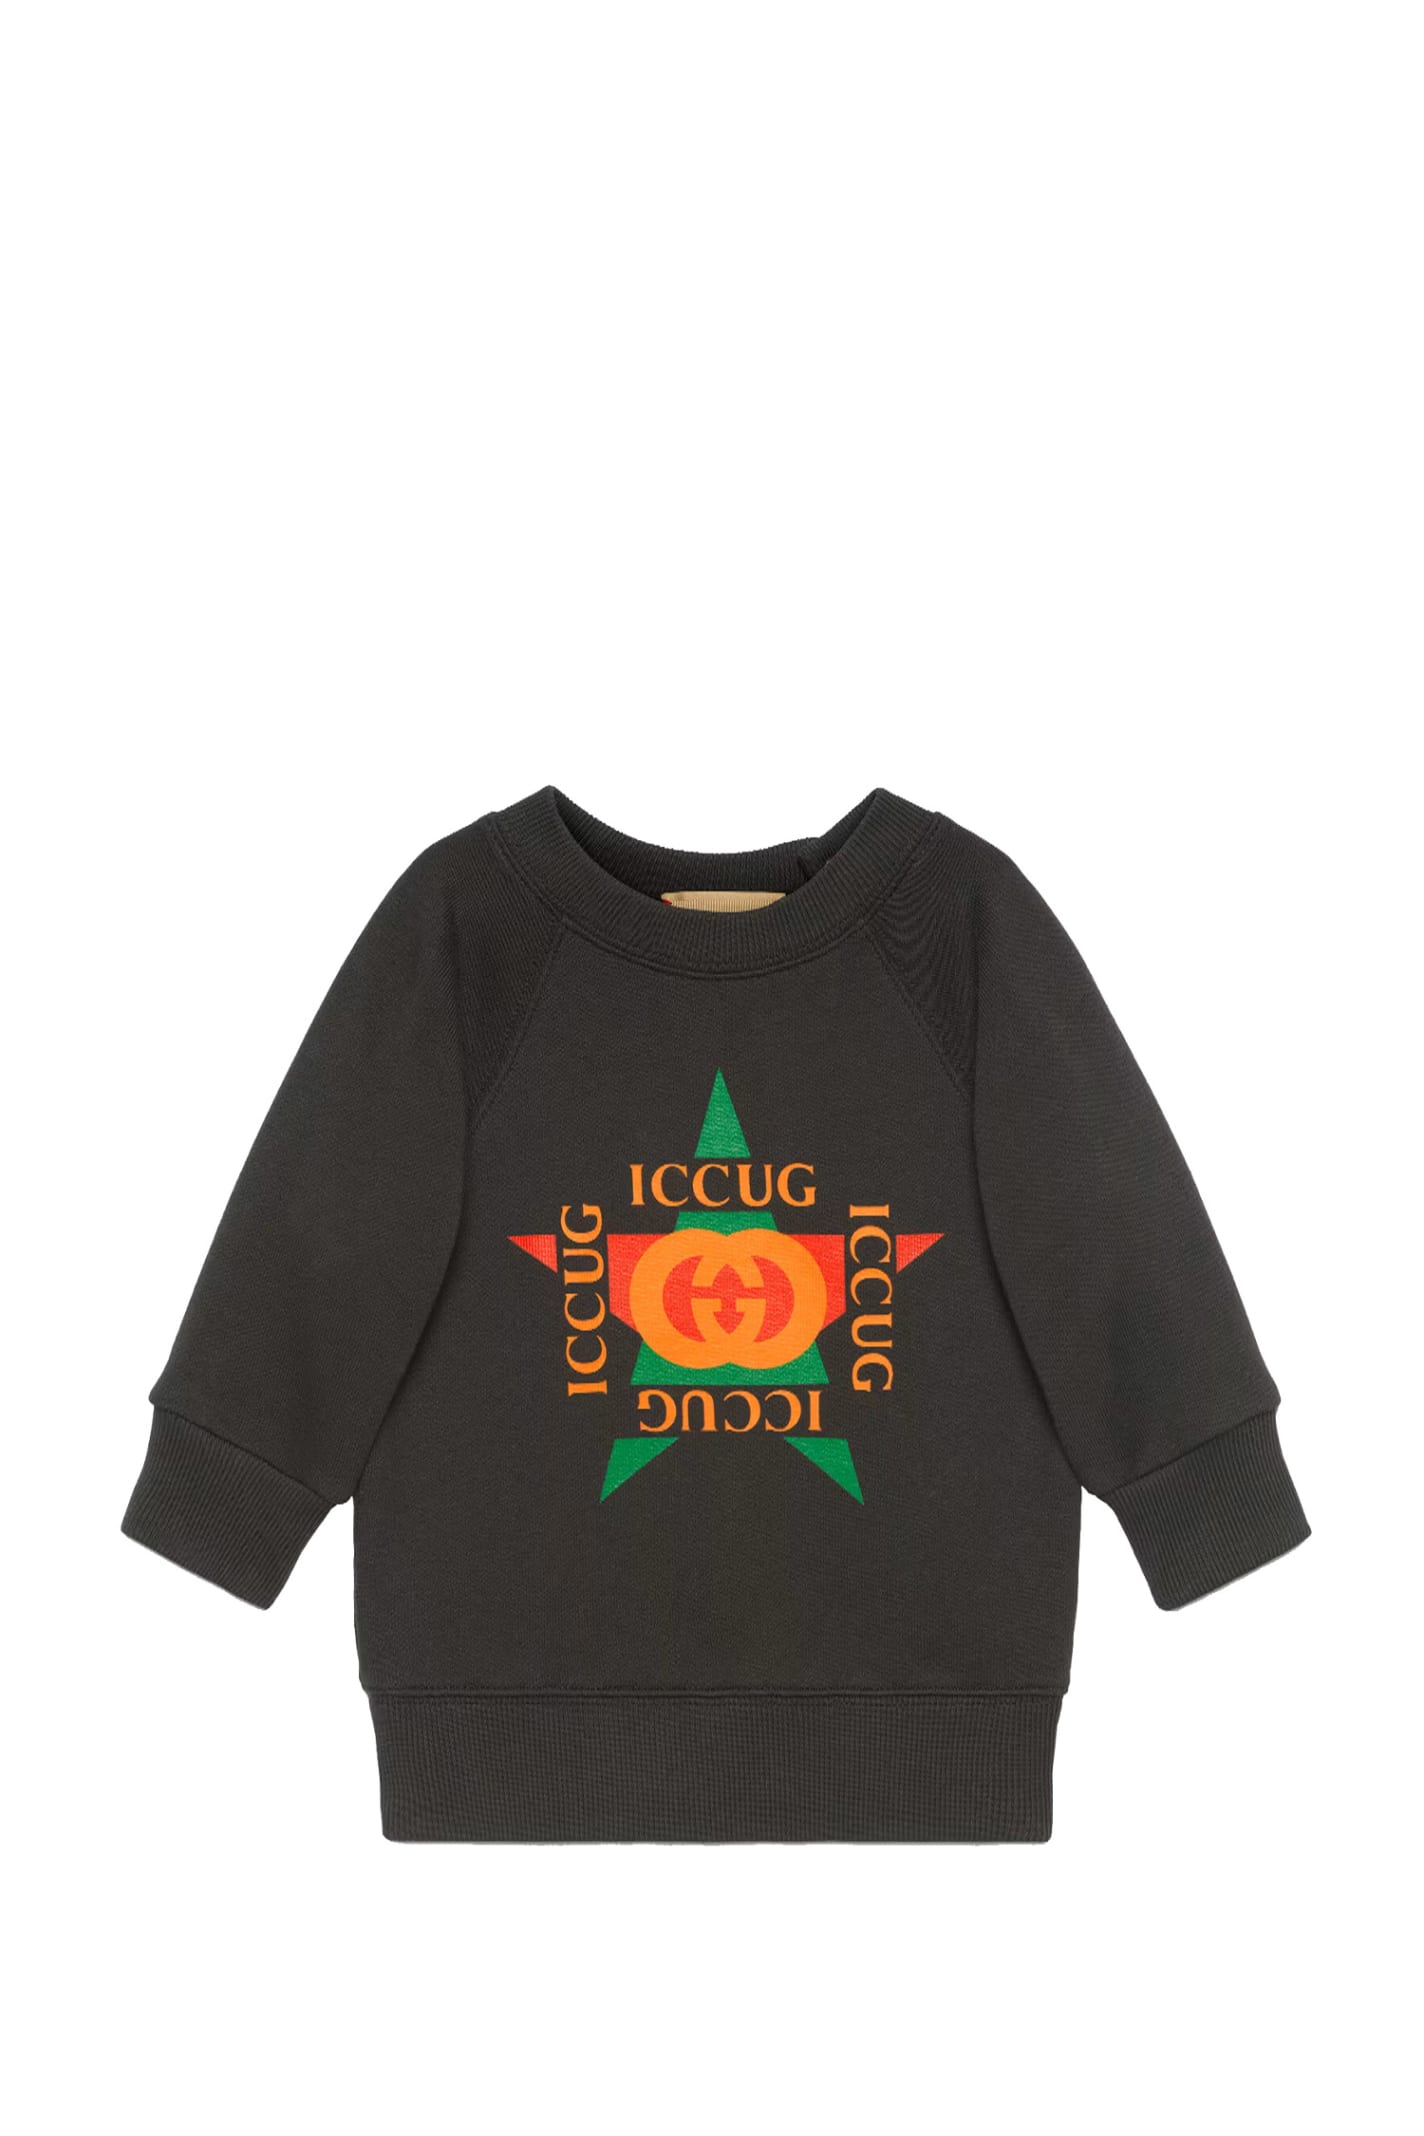 Gucci Cotton Sweatshirt With Print